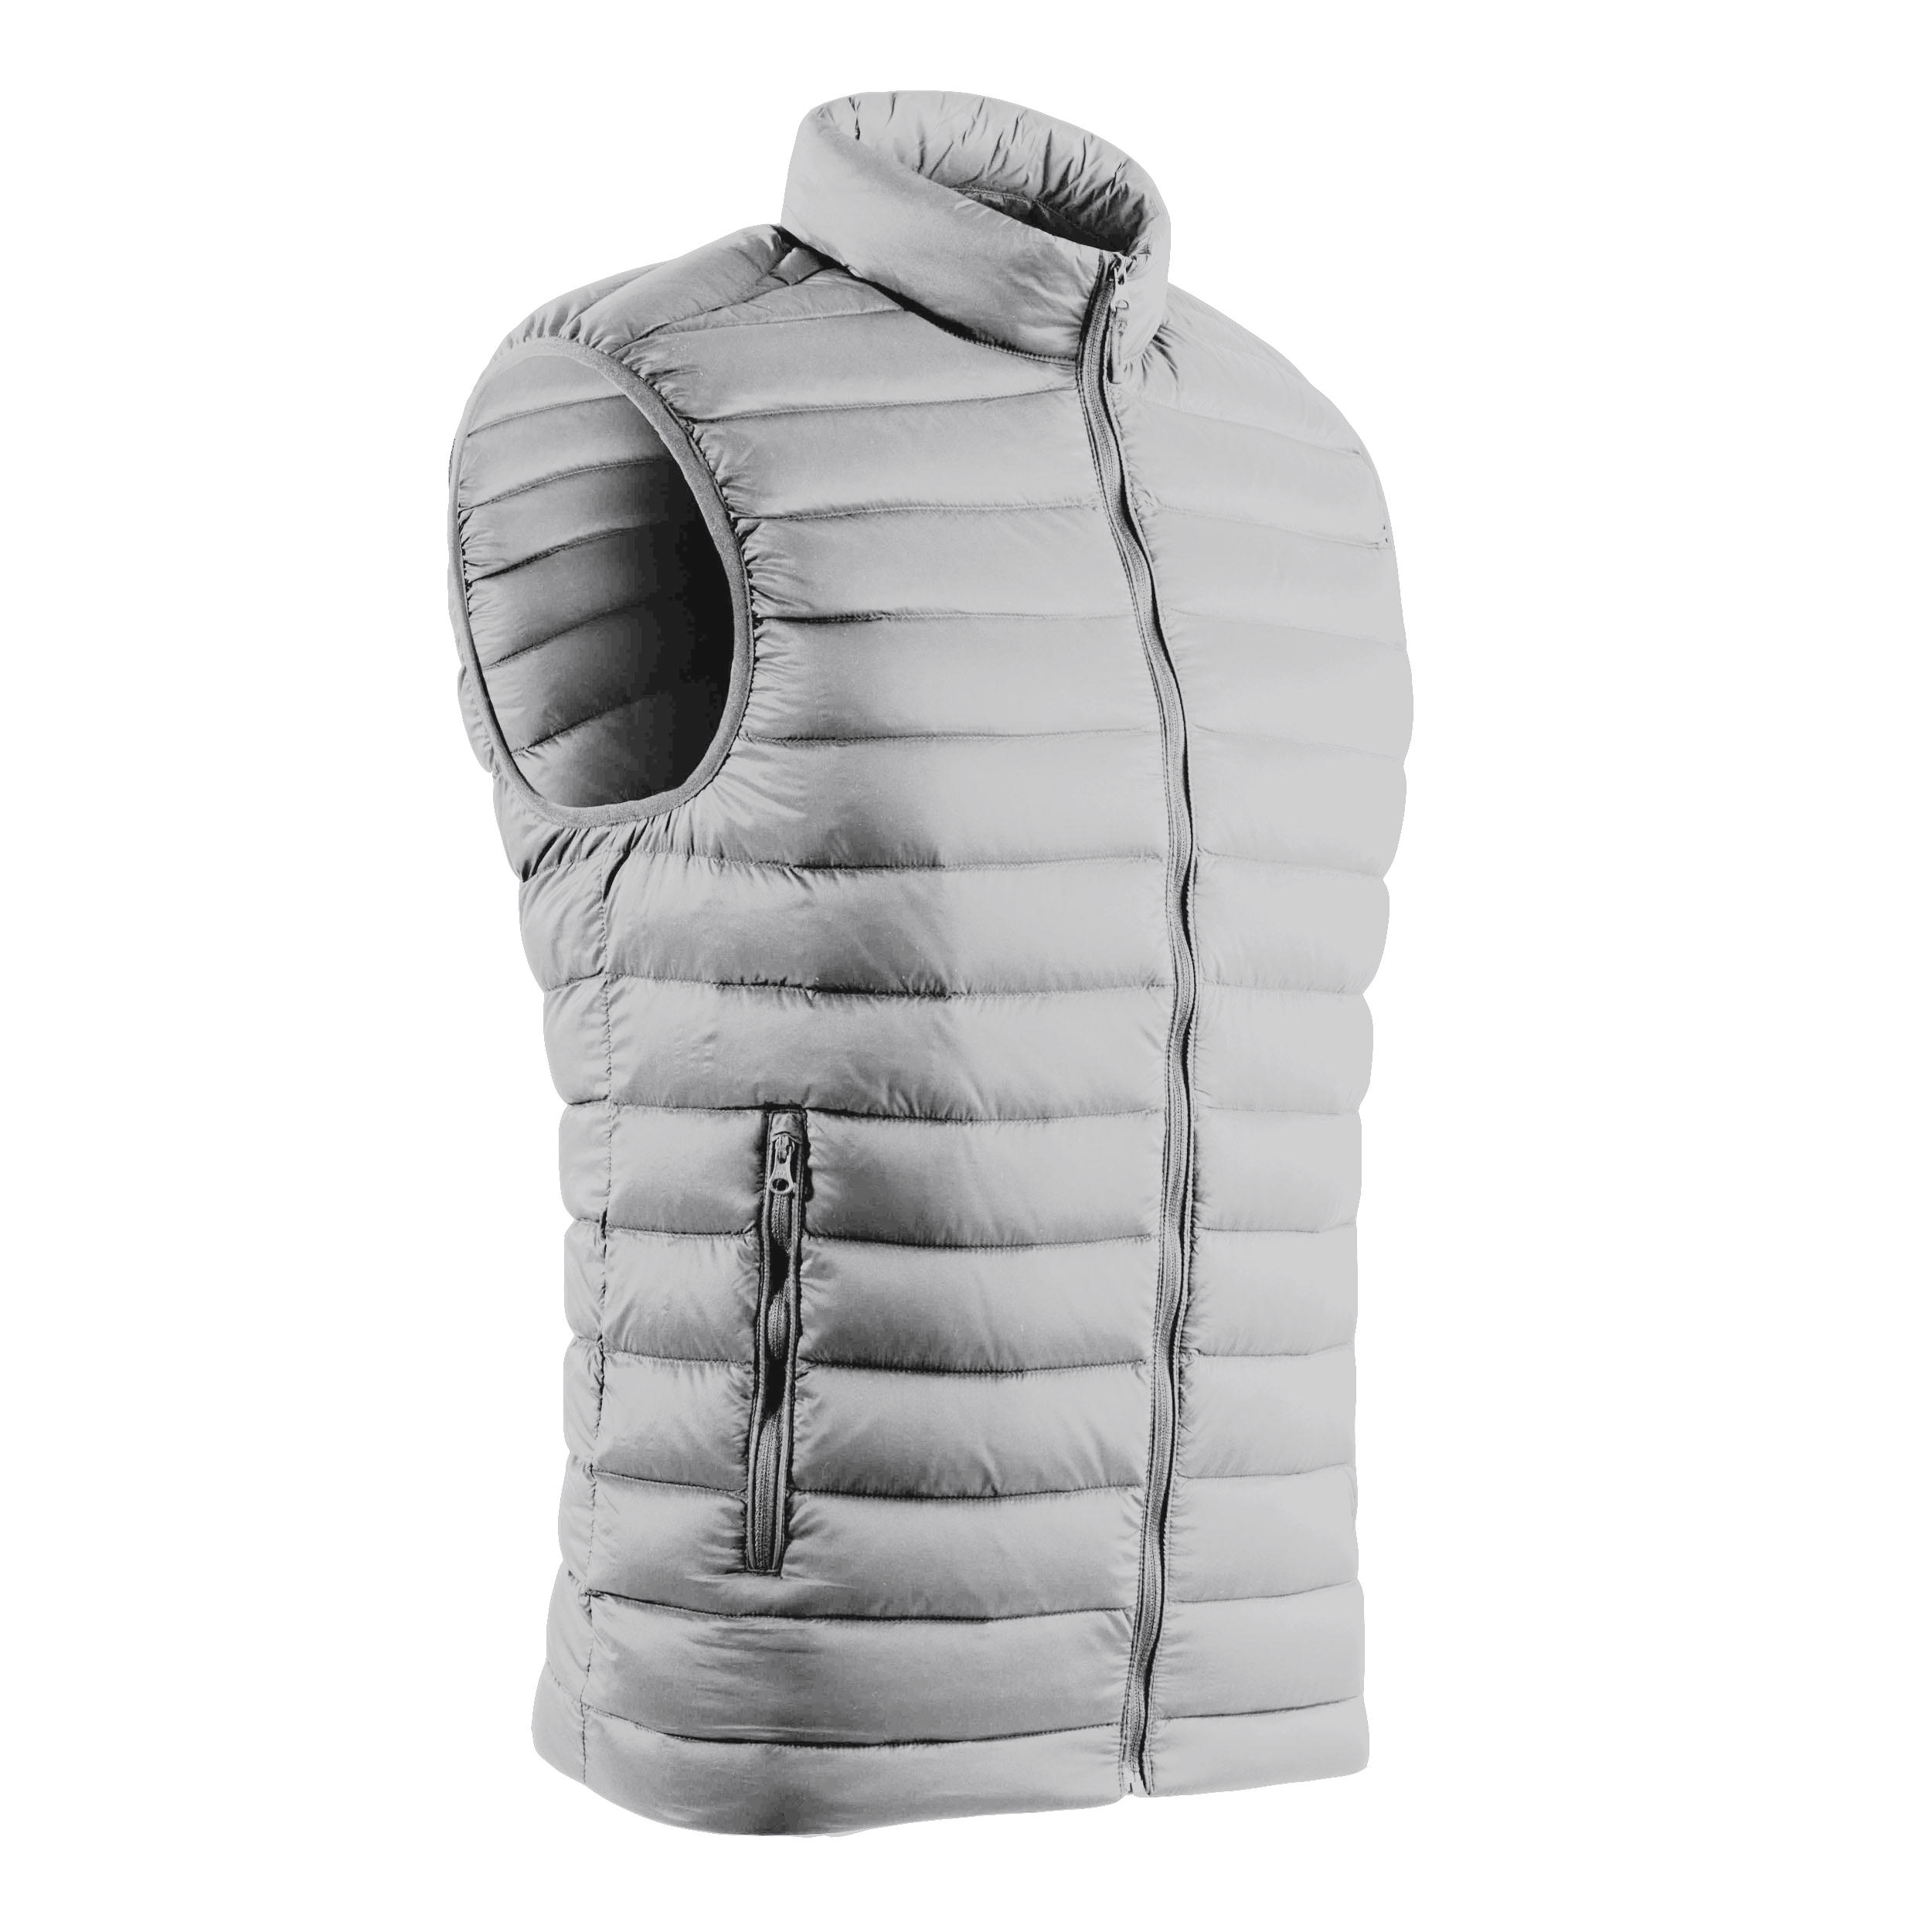 INESIS Men's sleeveless down golf jacket - MW500 light grey